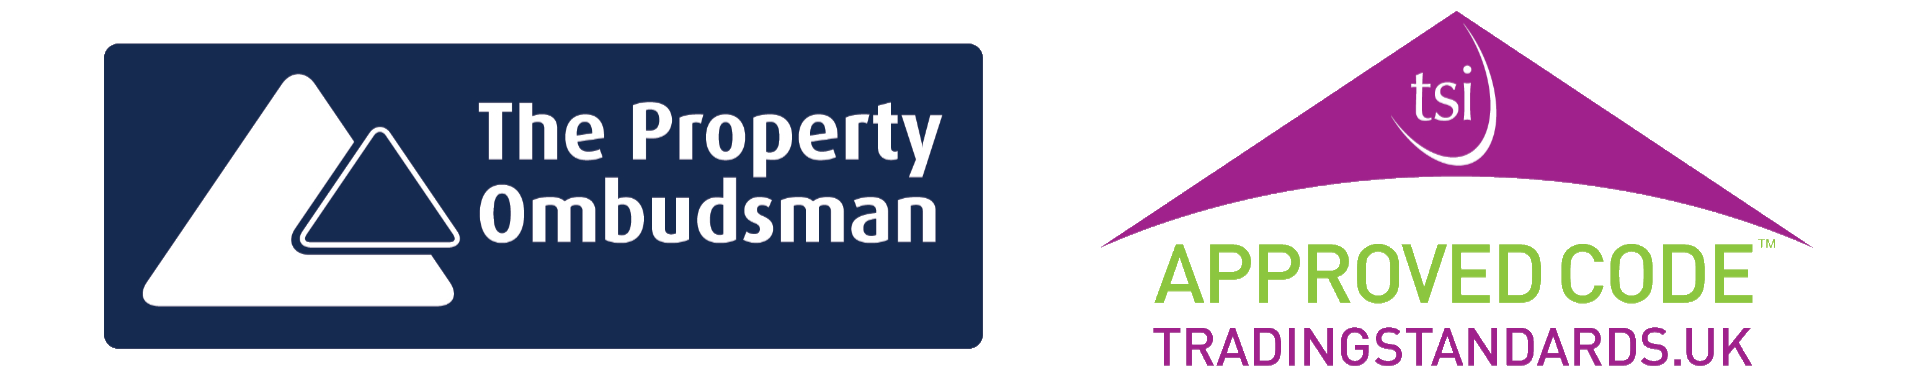 The Property Ombudsman Sales